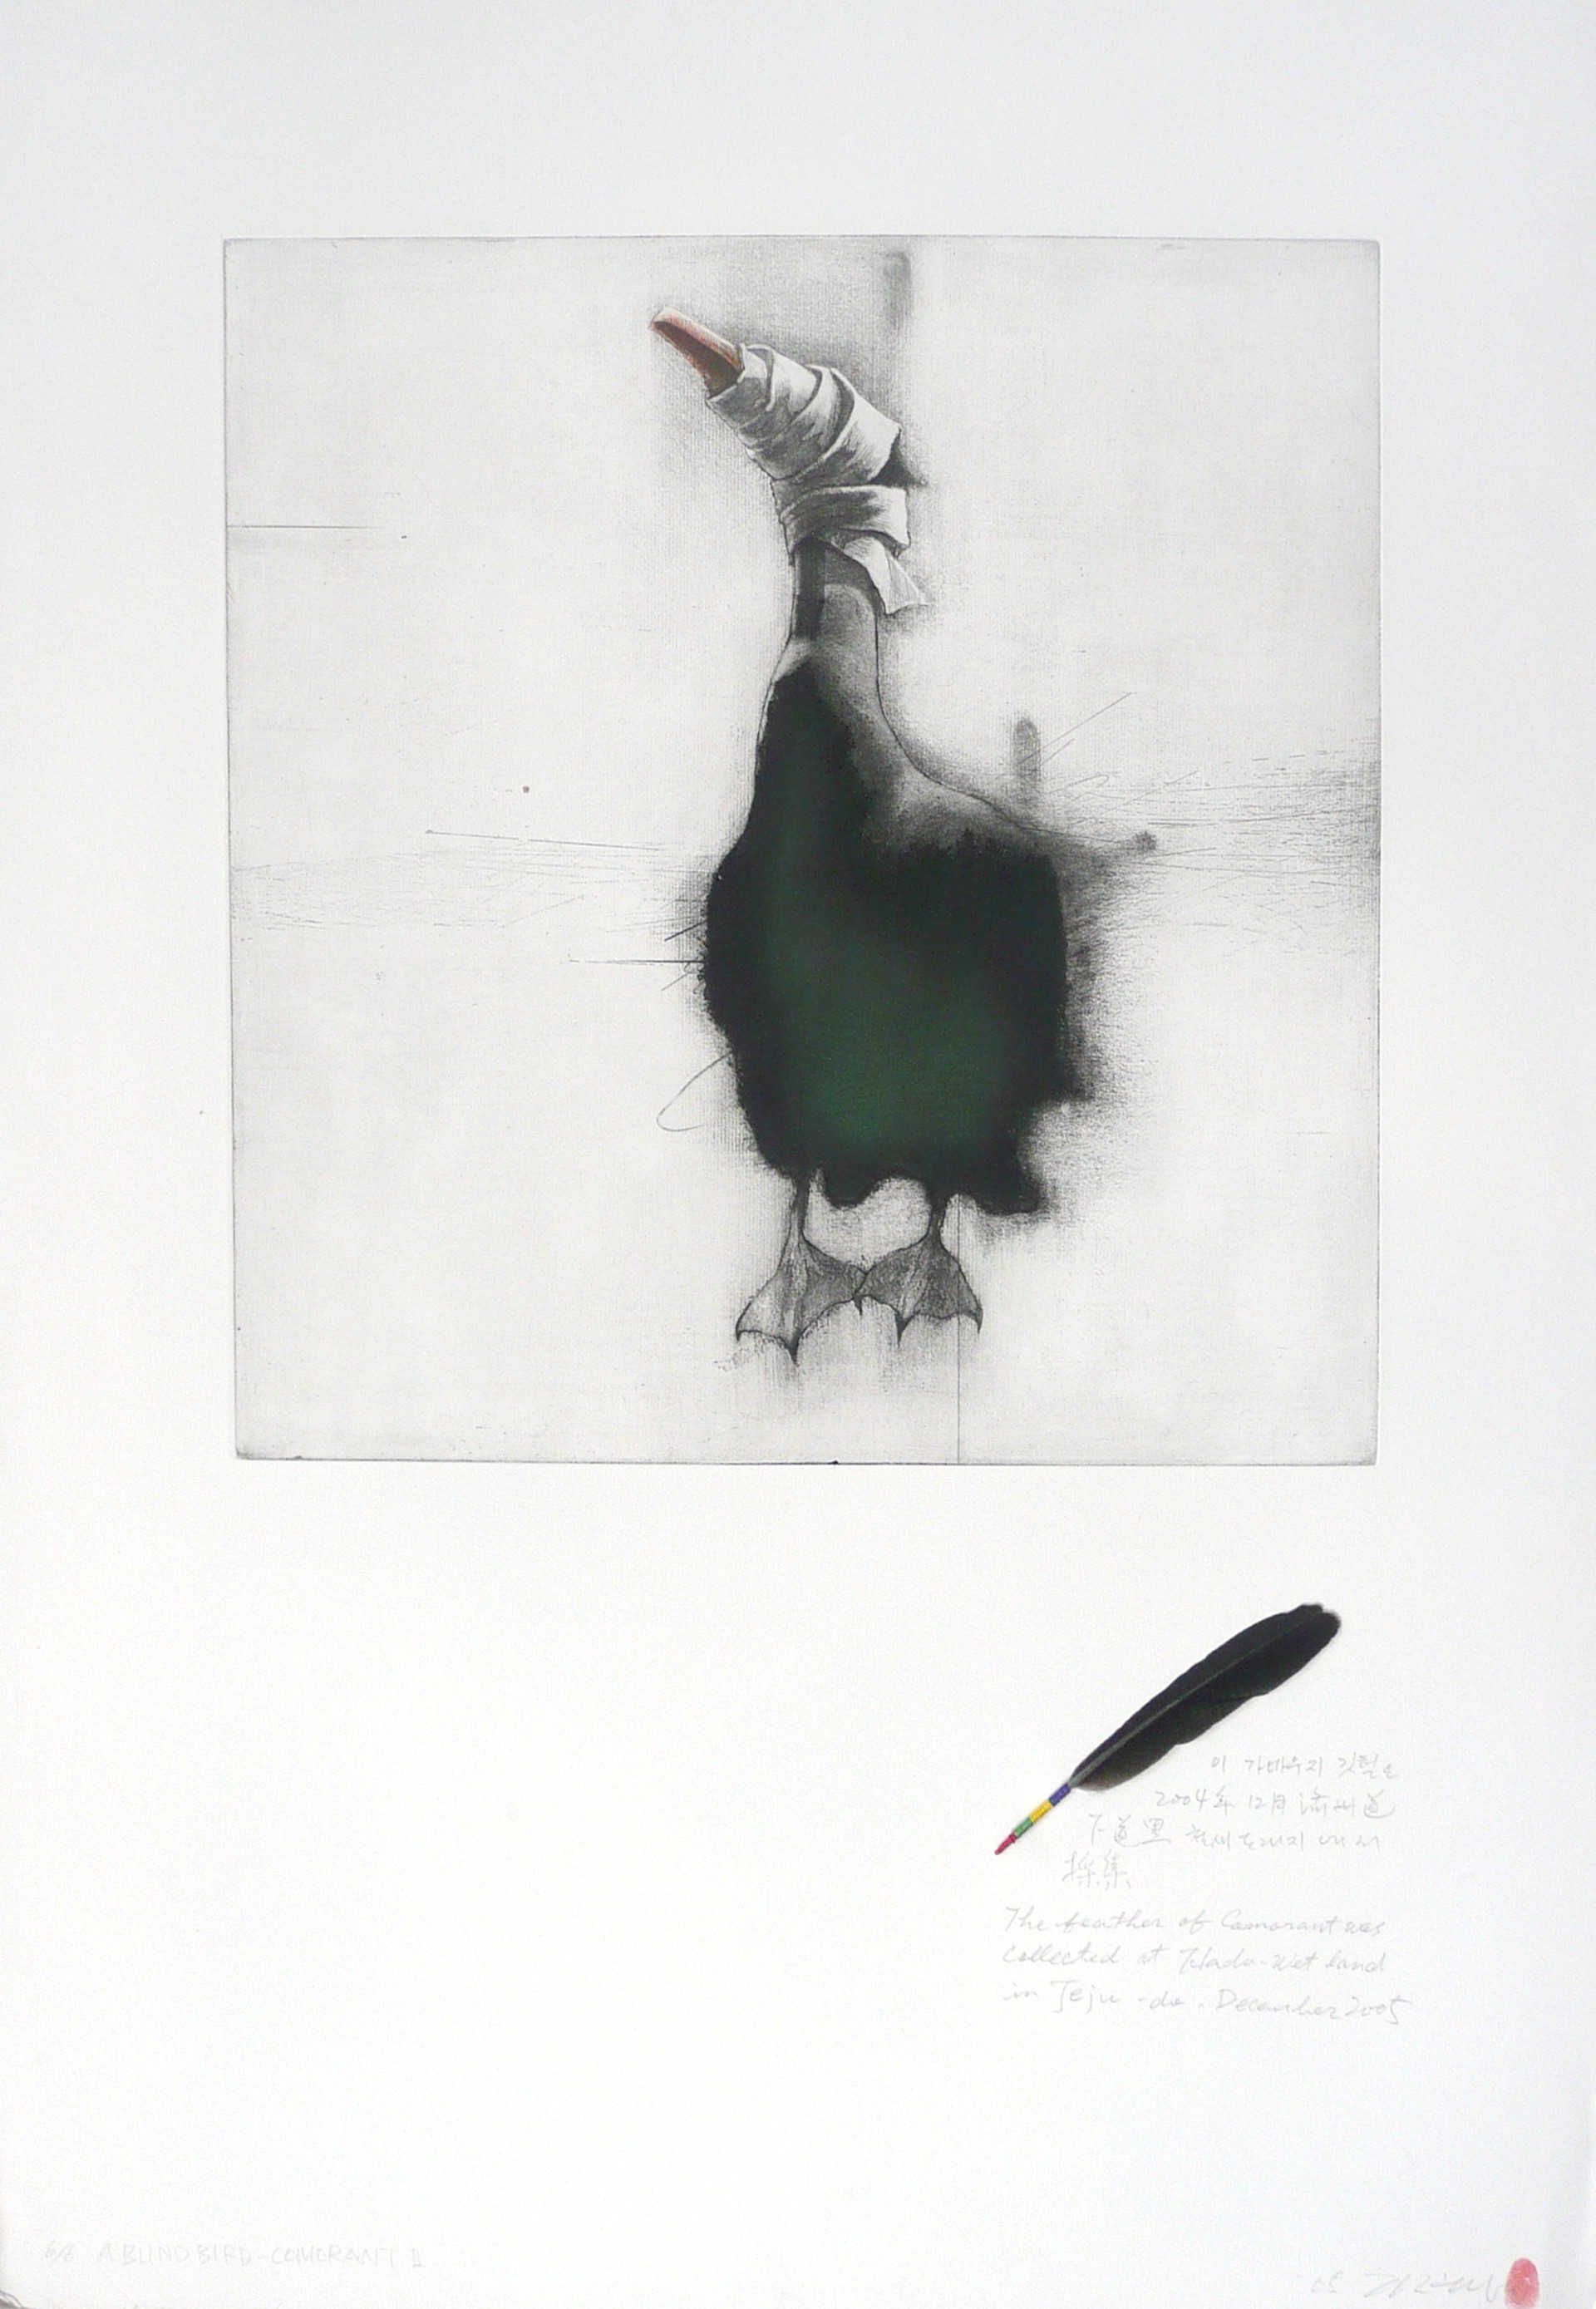 A Blind Bird: Cormorant II (6/6) by Gilchun Koh